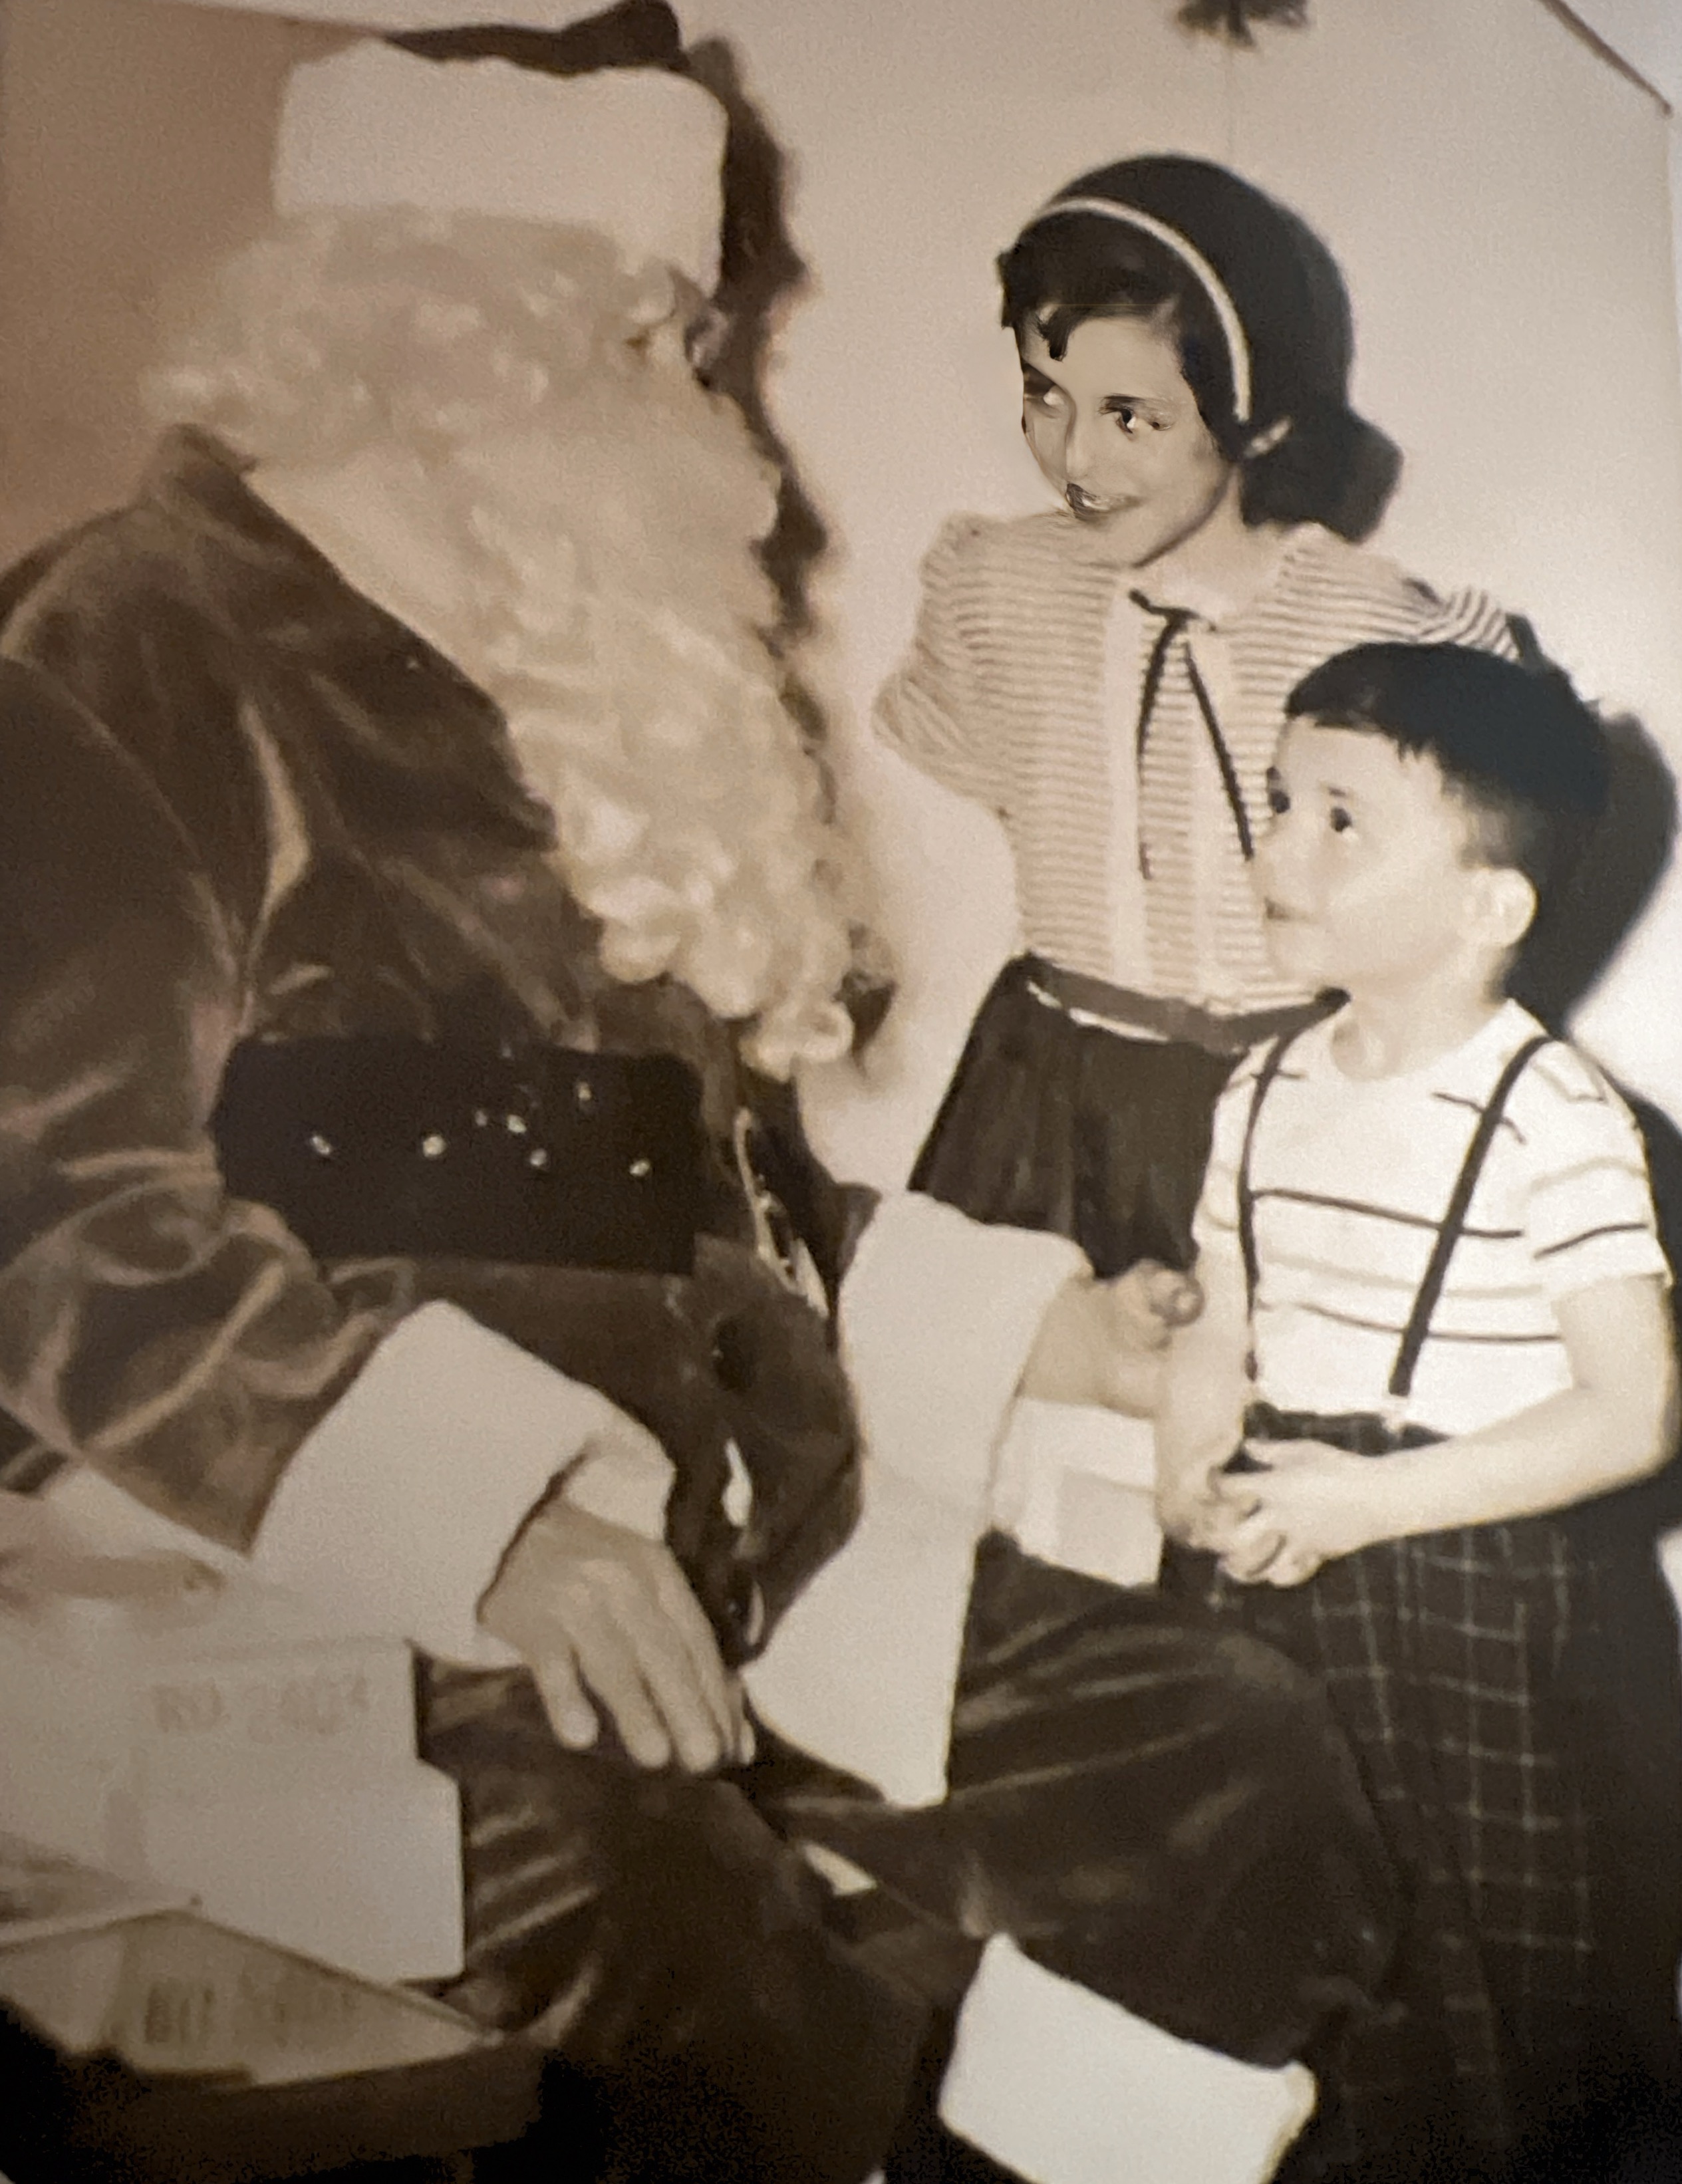 My brother, Jim Noll and I visiting Santa in 1953